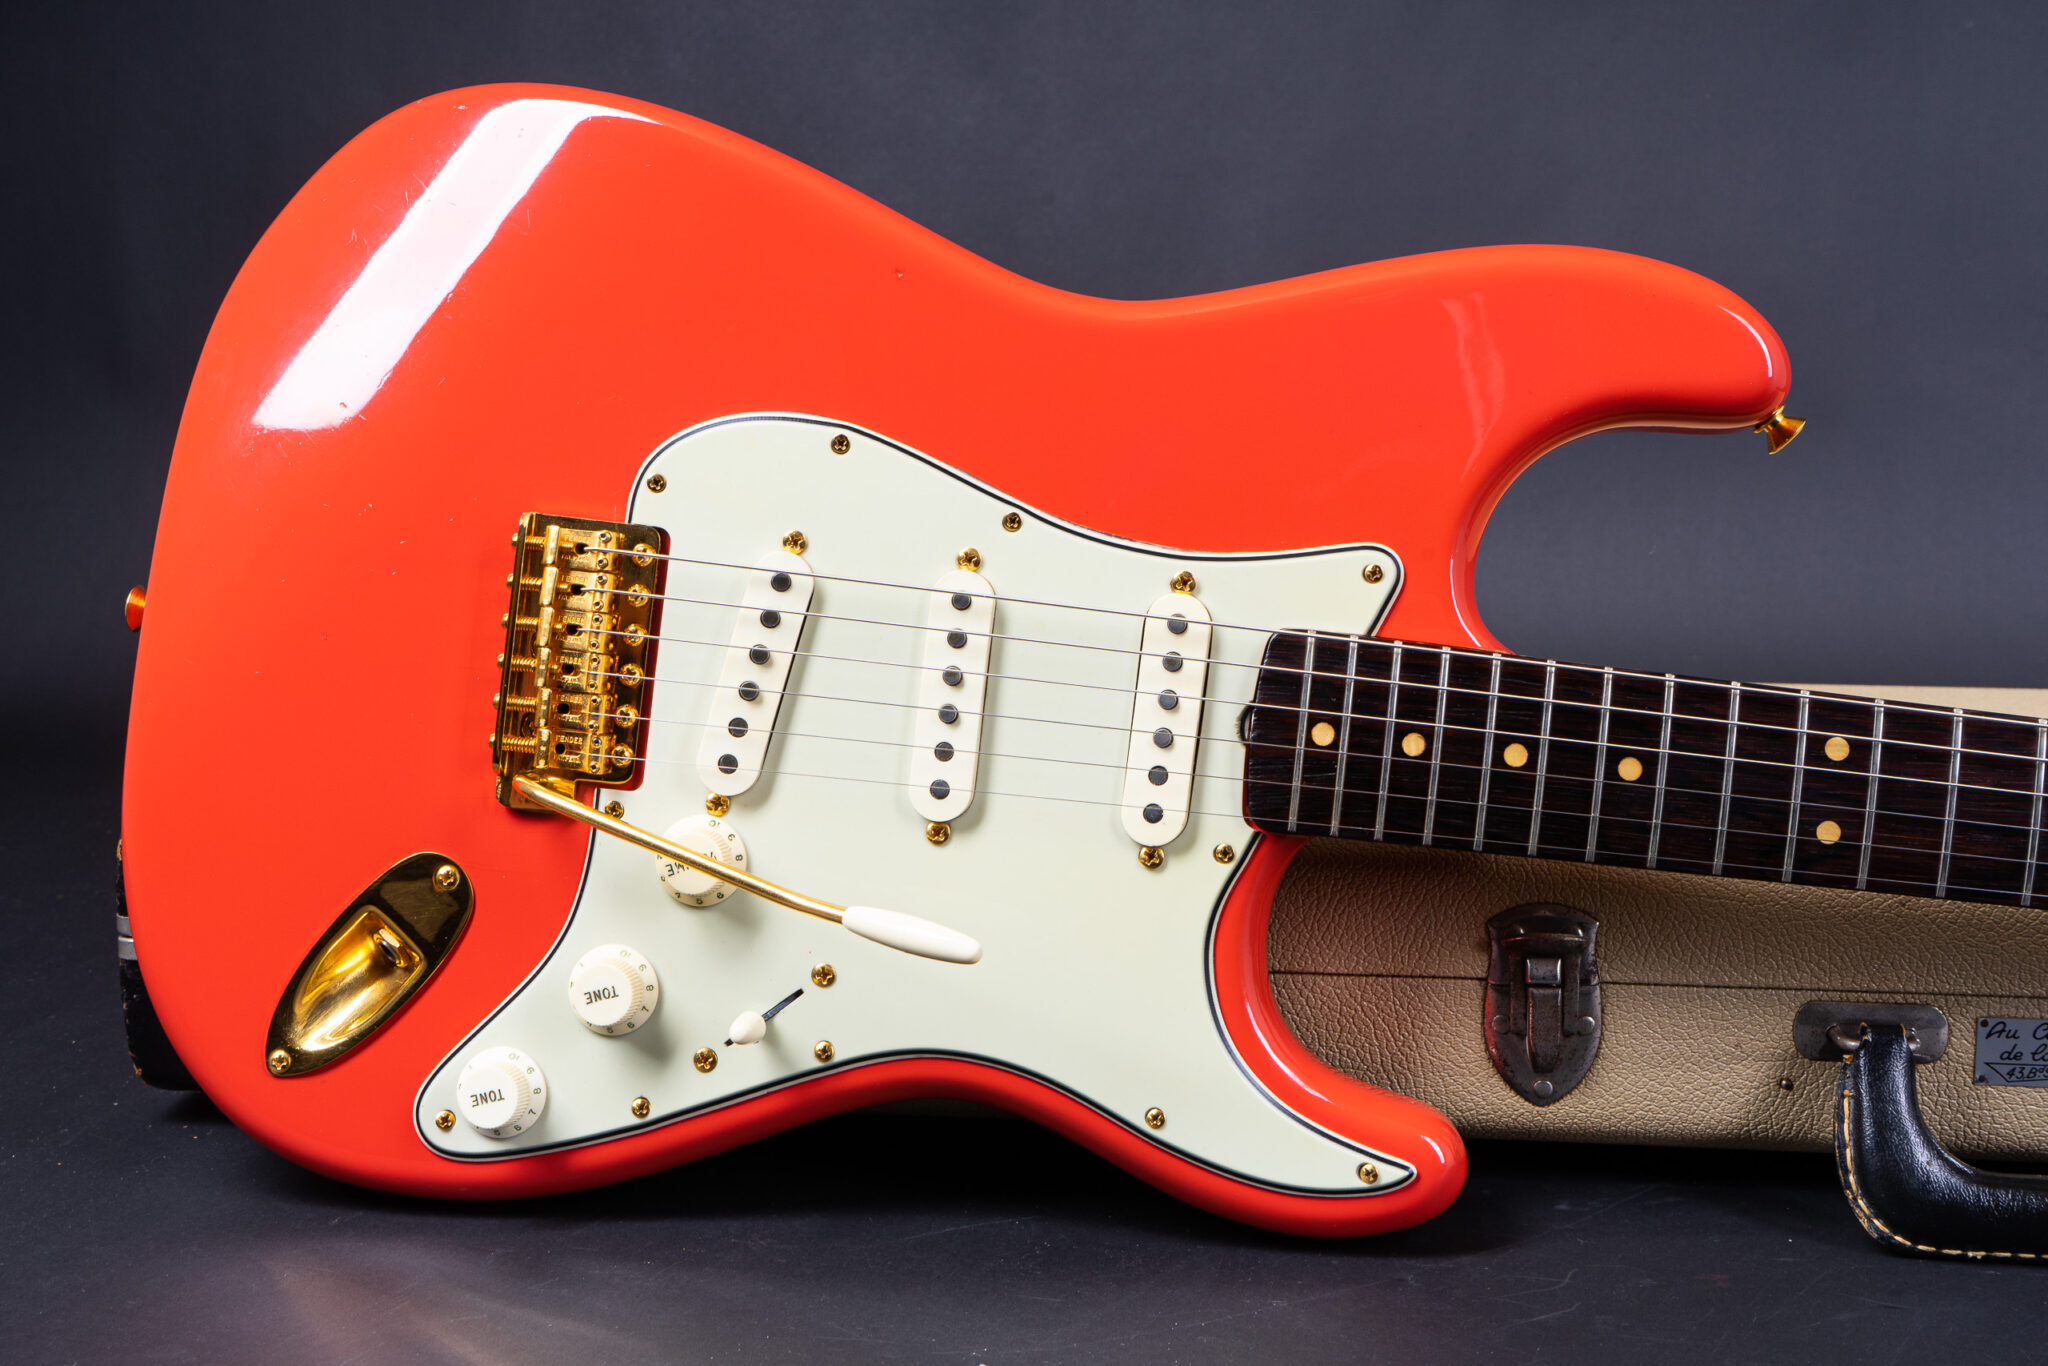 https://guitarpoint.de/app/uploads/products/1964-fender-stratocaster-fiesta-red-gold-hardware/1964-Fender-Stratocaster-Fiesta-Red-L36615-9-2048x1366.jpg